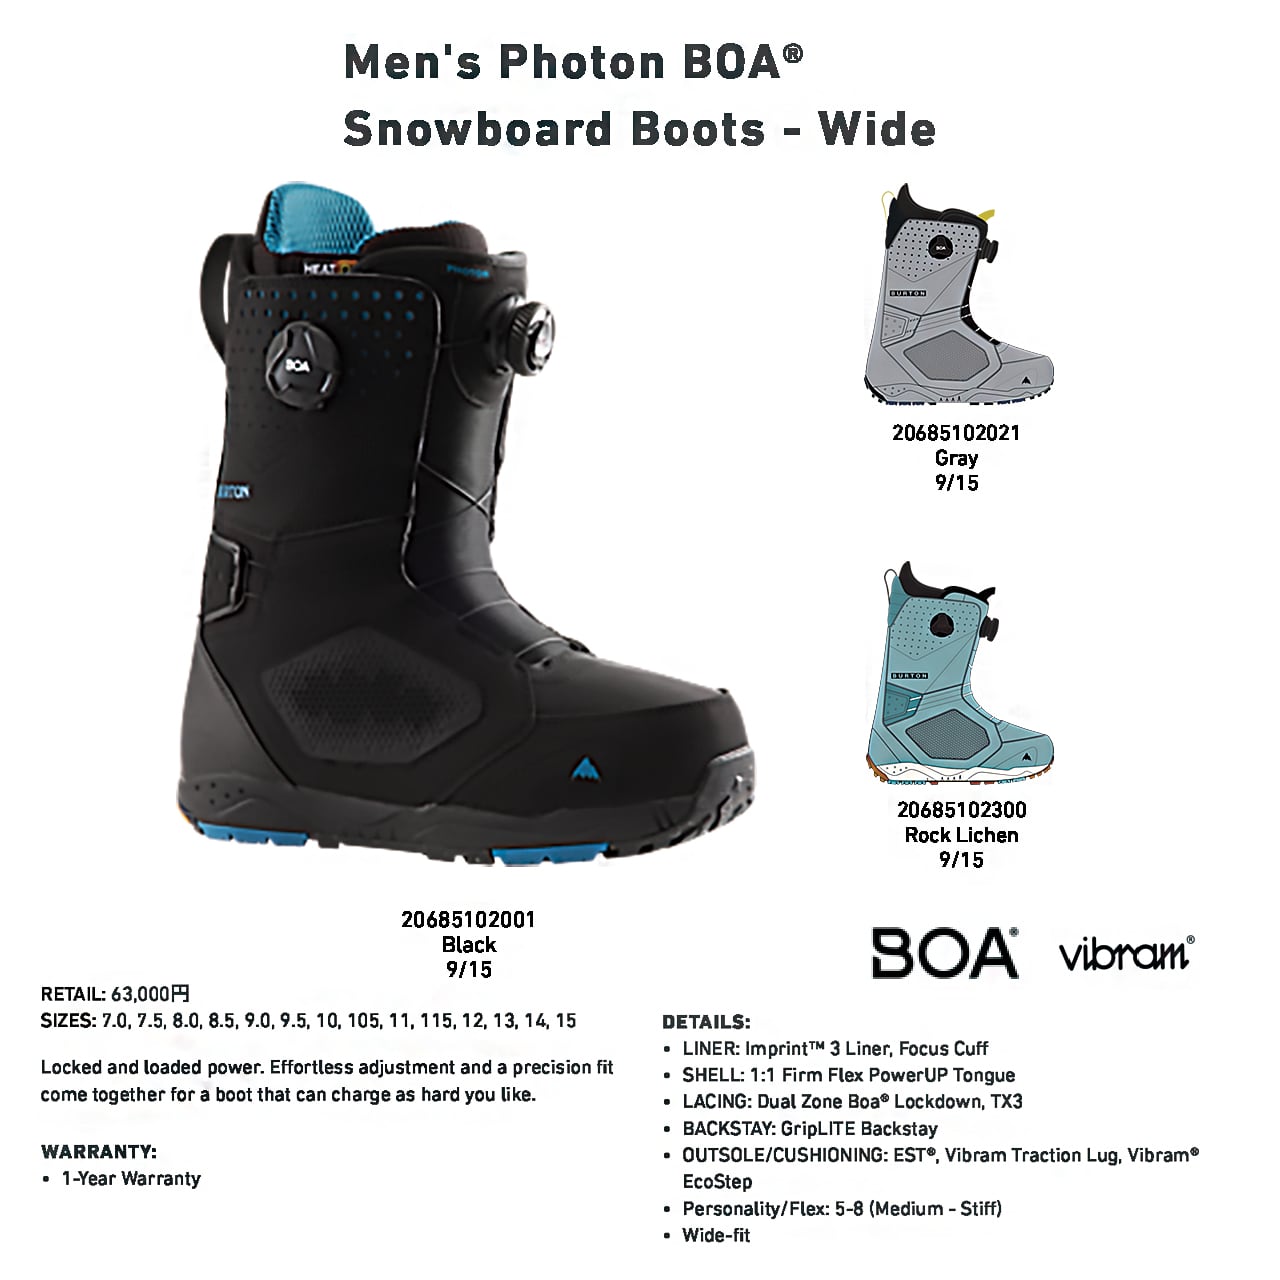 Burton Boa Wide Snowboarding Boots